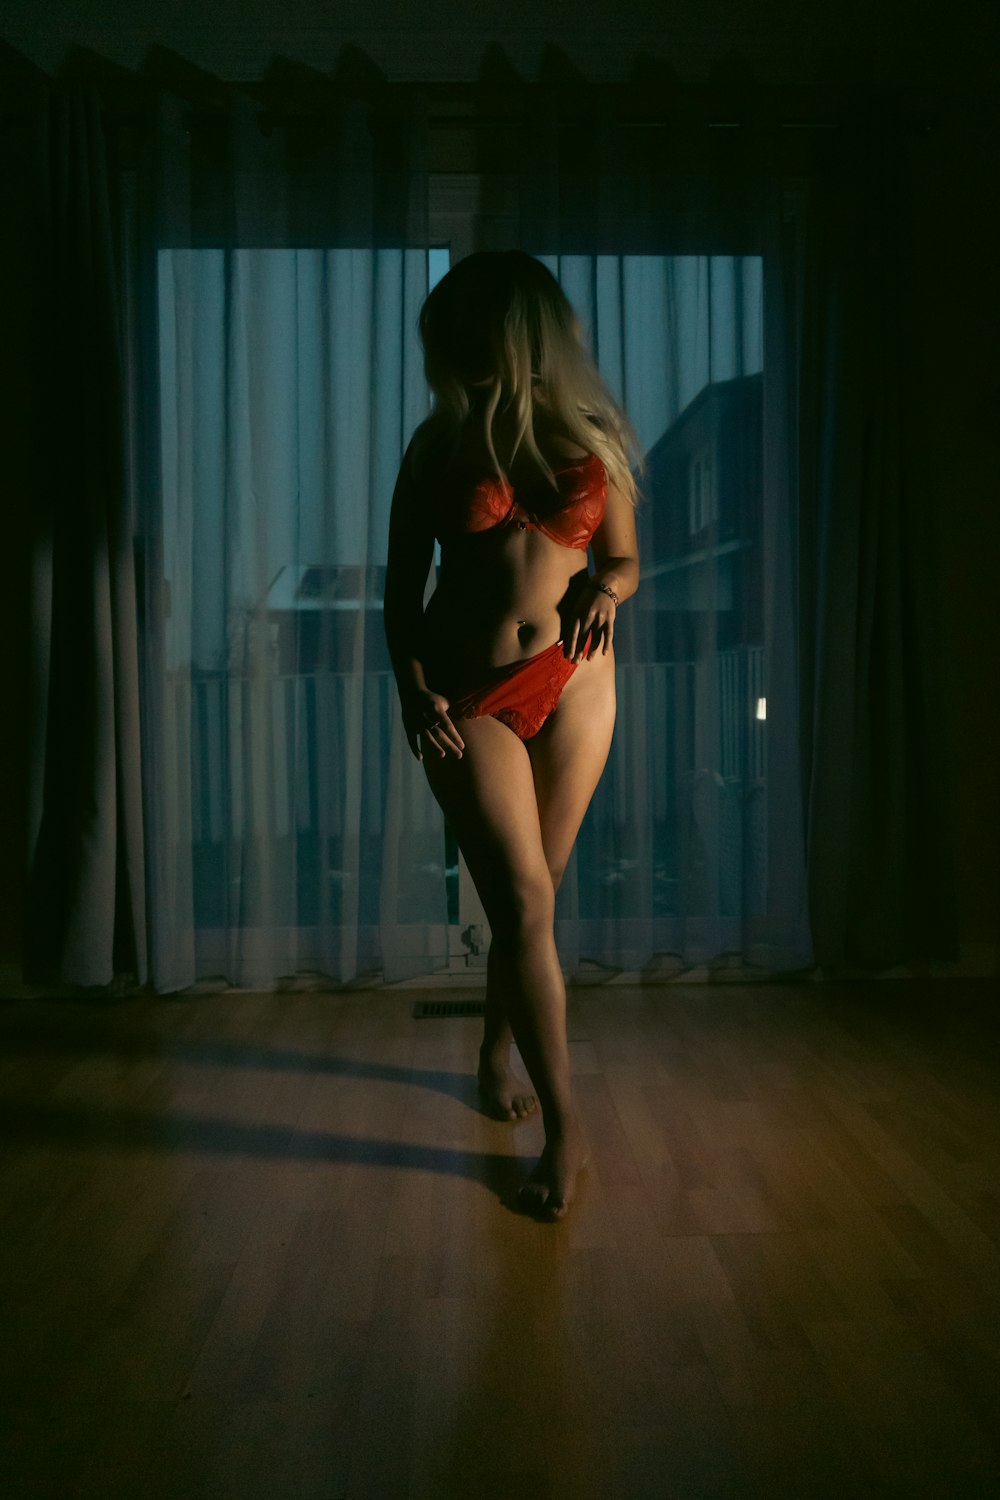 a woman in a red bikini standing in a dark room